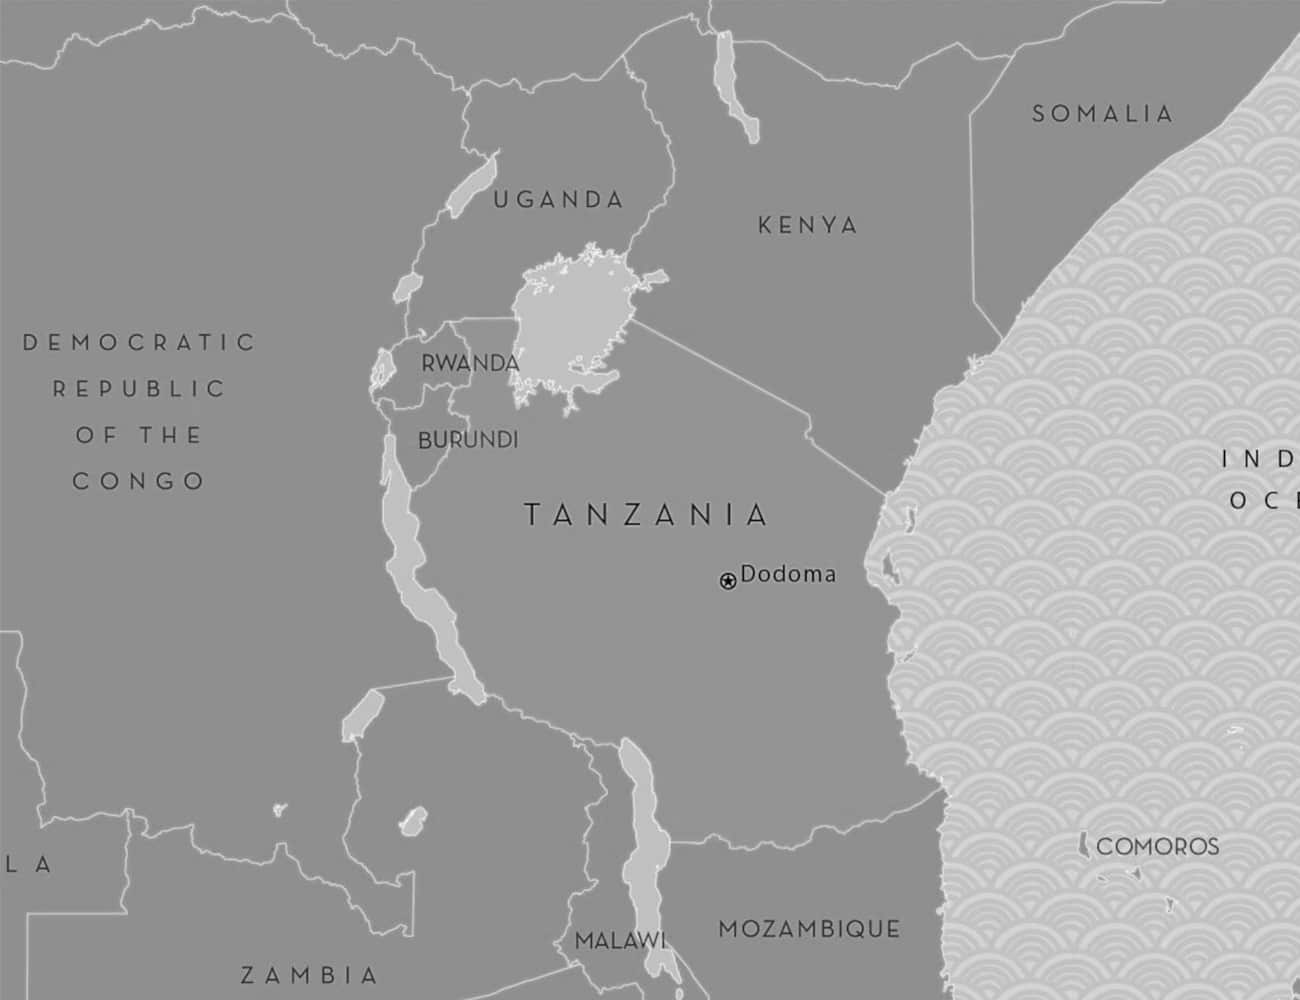 Tanzania's Location on a Map